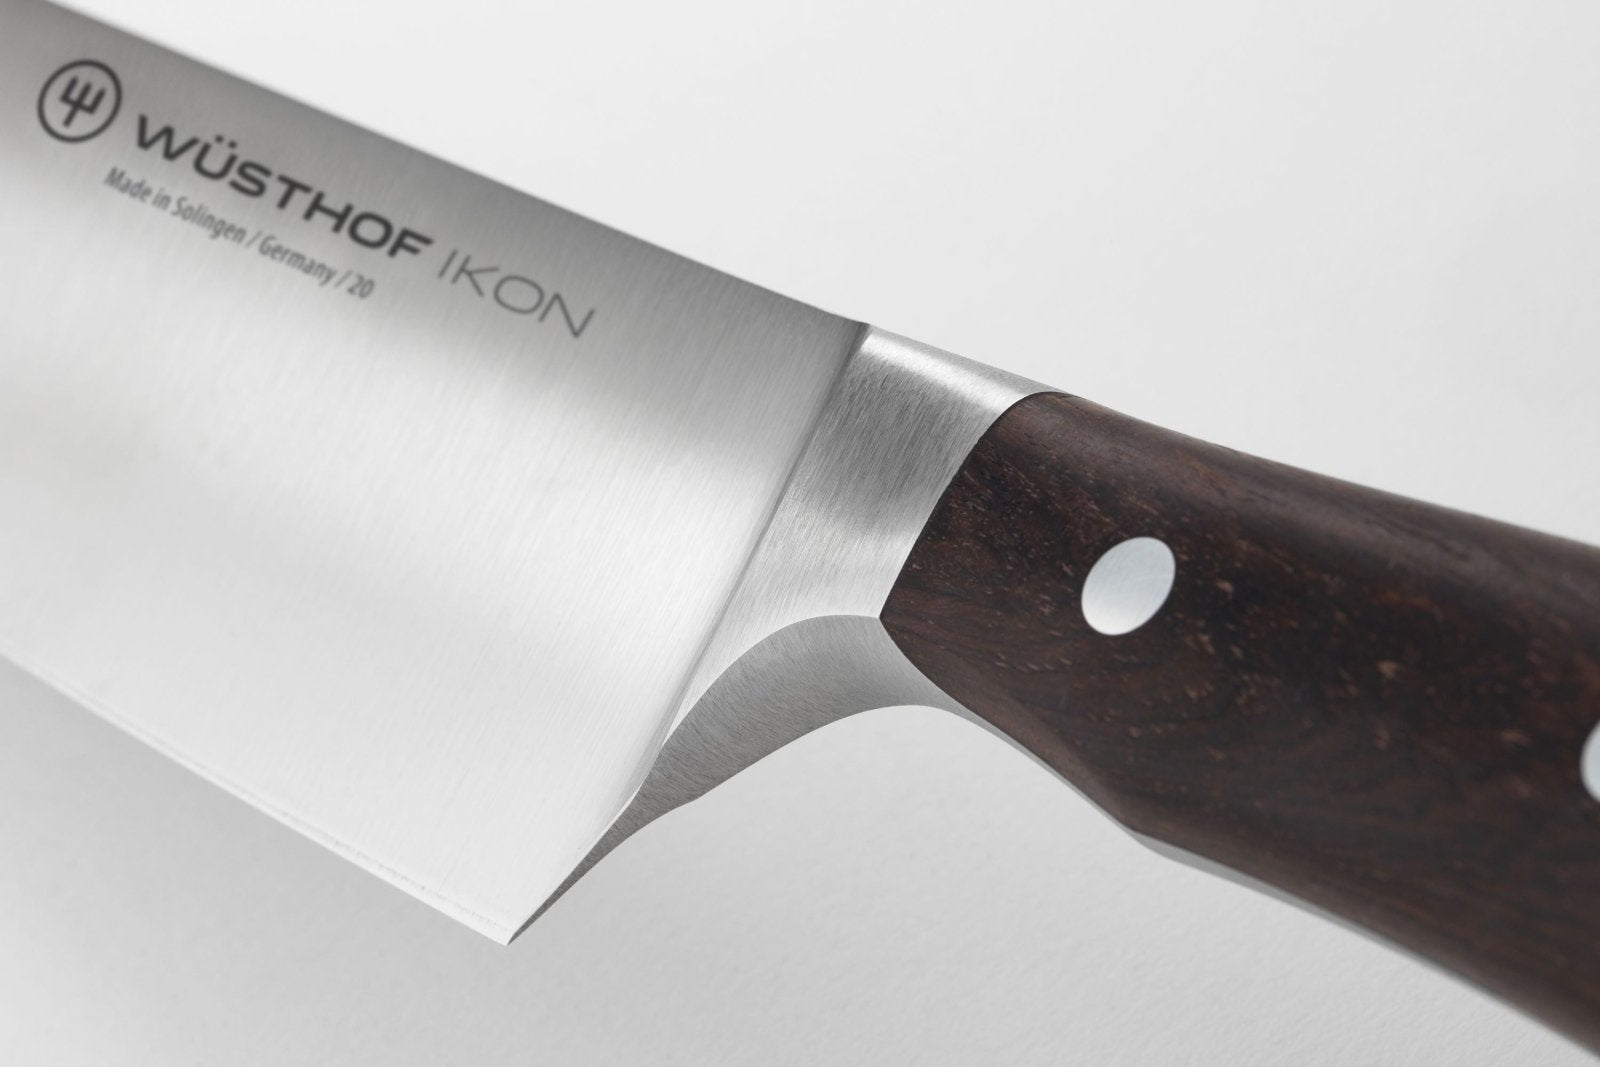 Wusthof IKON 12cm Utility Knife - WT1010530412 - The Cotswold Knife Company